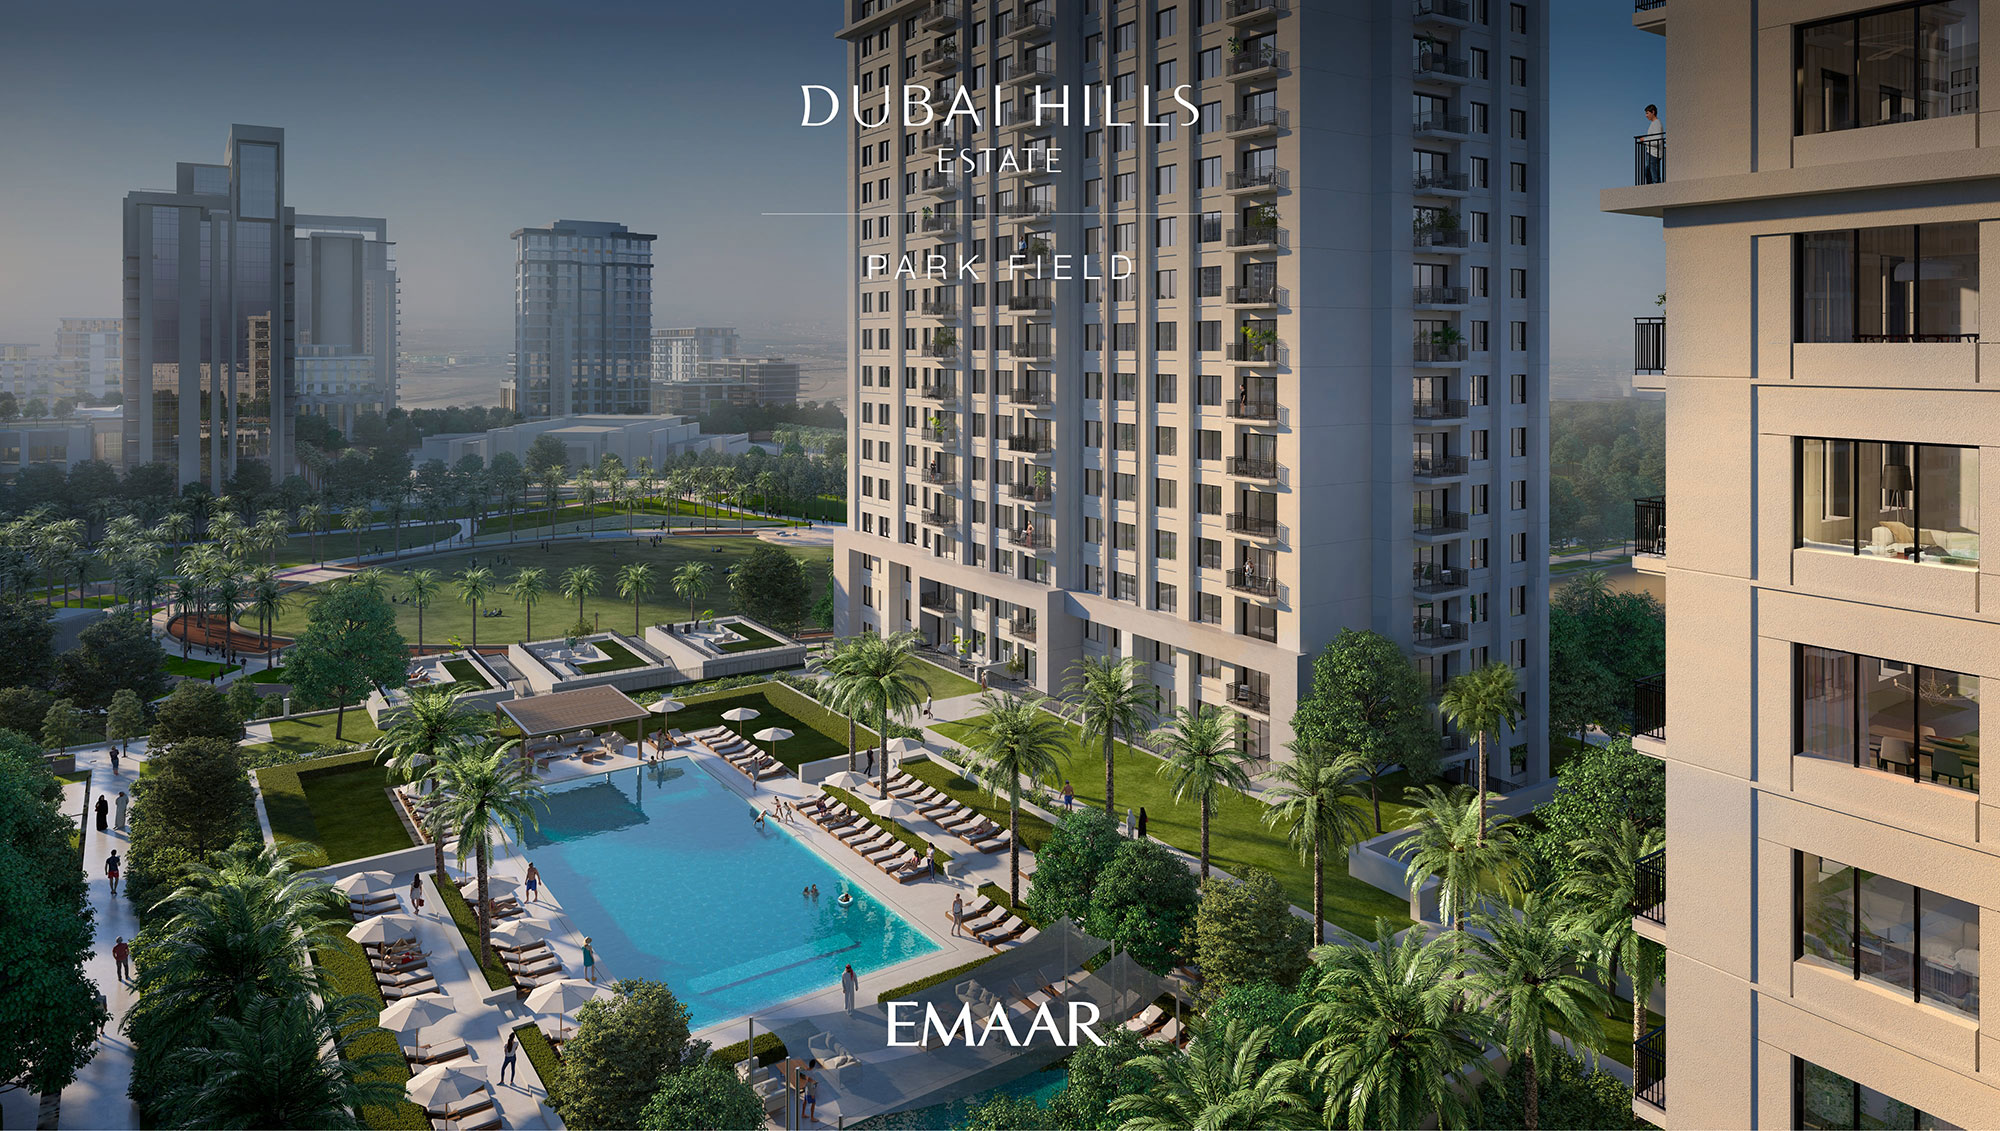 ParkField at Dubai Hills Estate by EMAAR